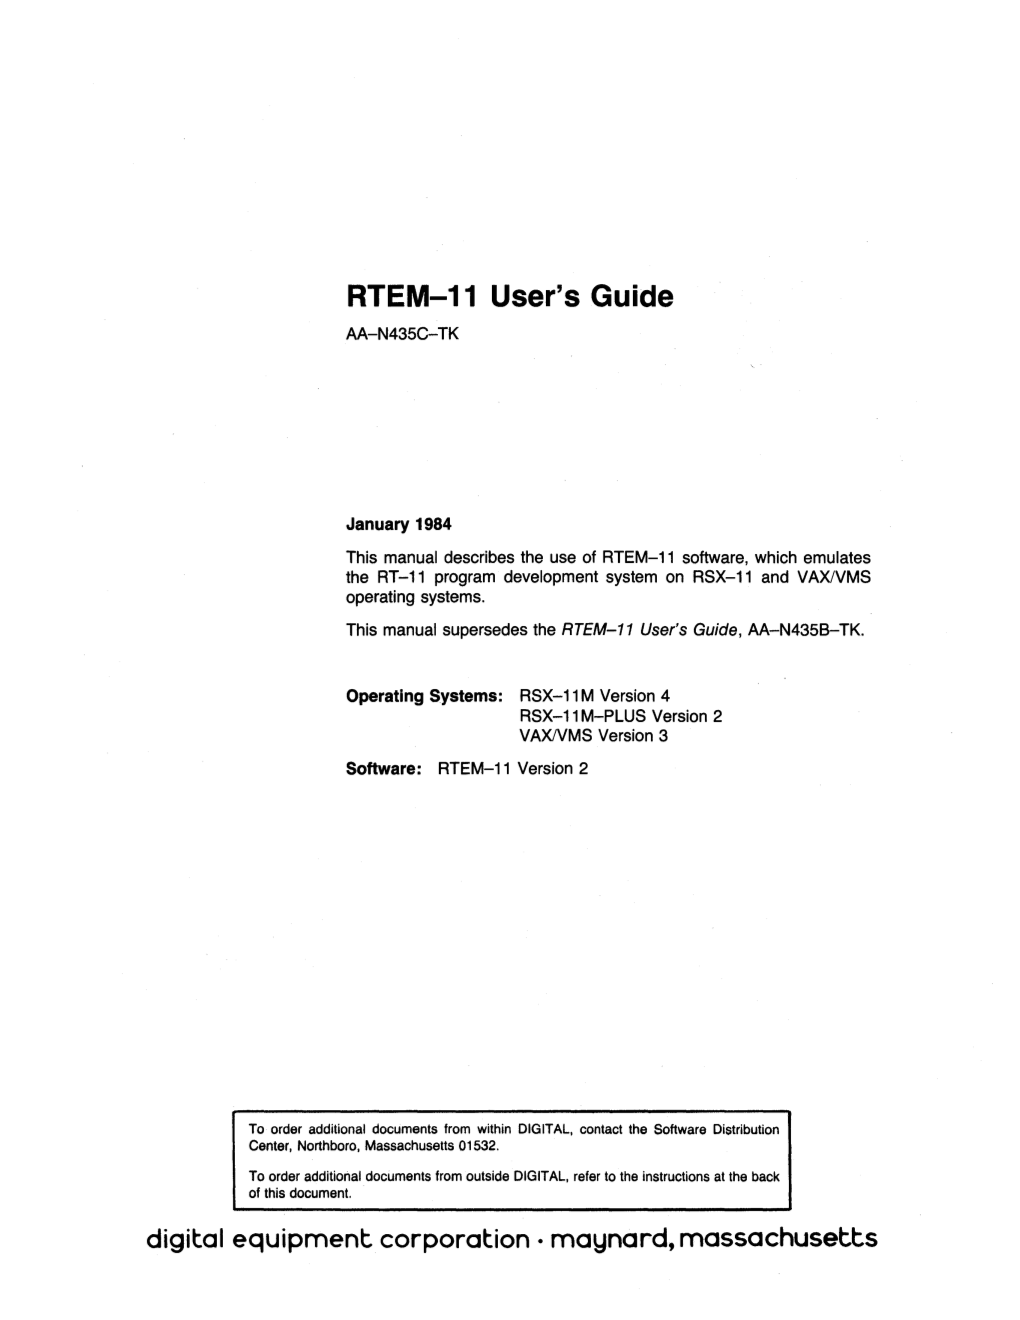 RTEM-11 User's Guide AA-N435C-TK